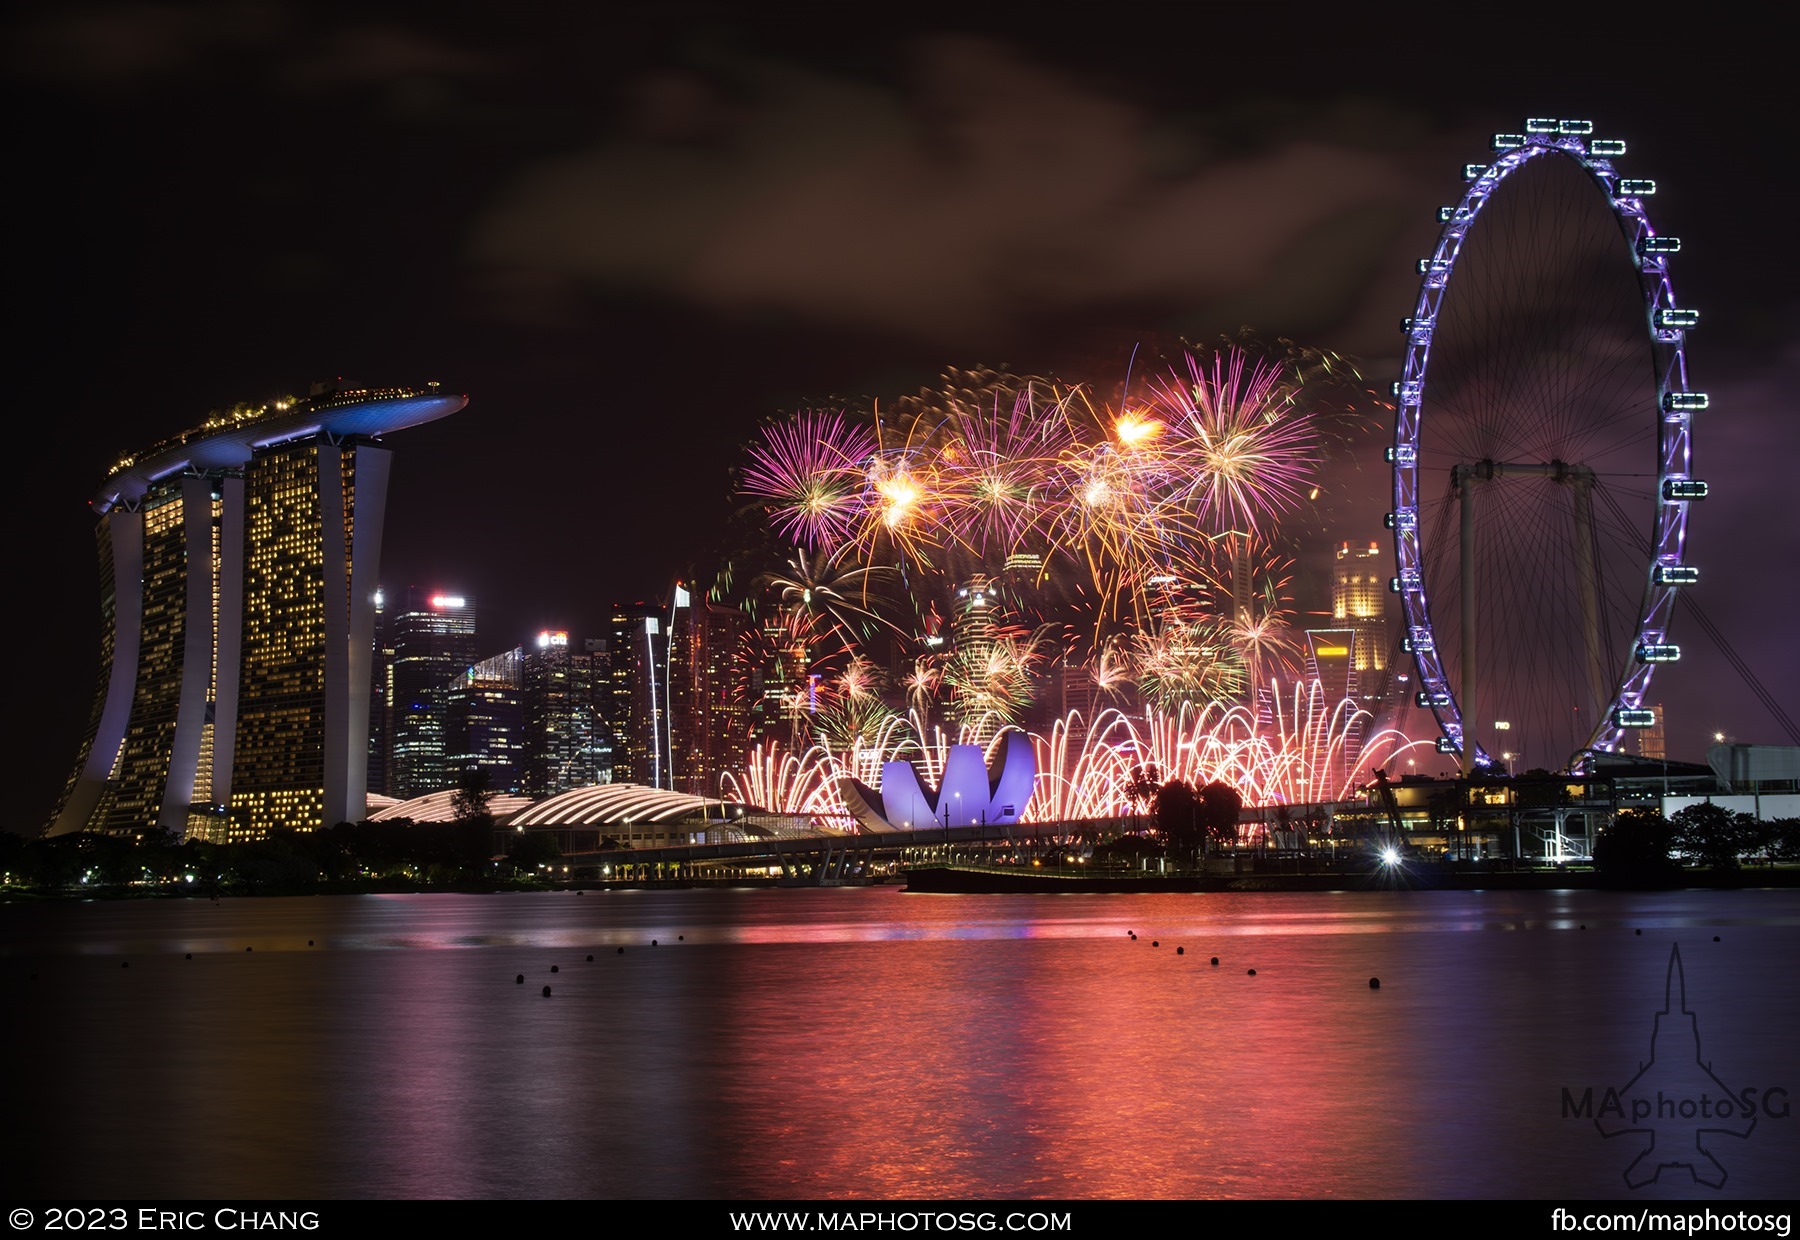 Beautiful fireworks light up the Marina Bay area.